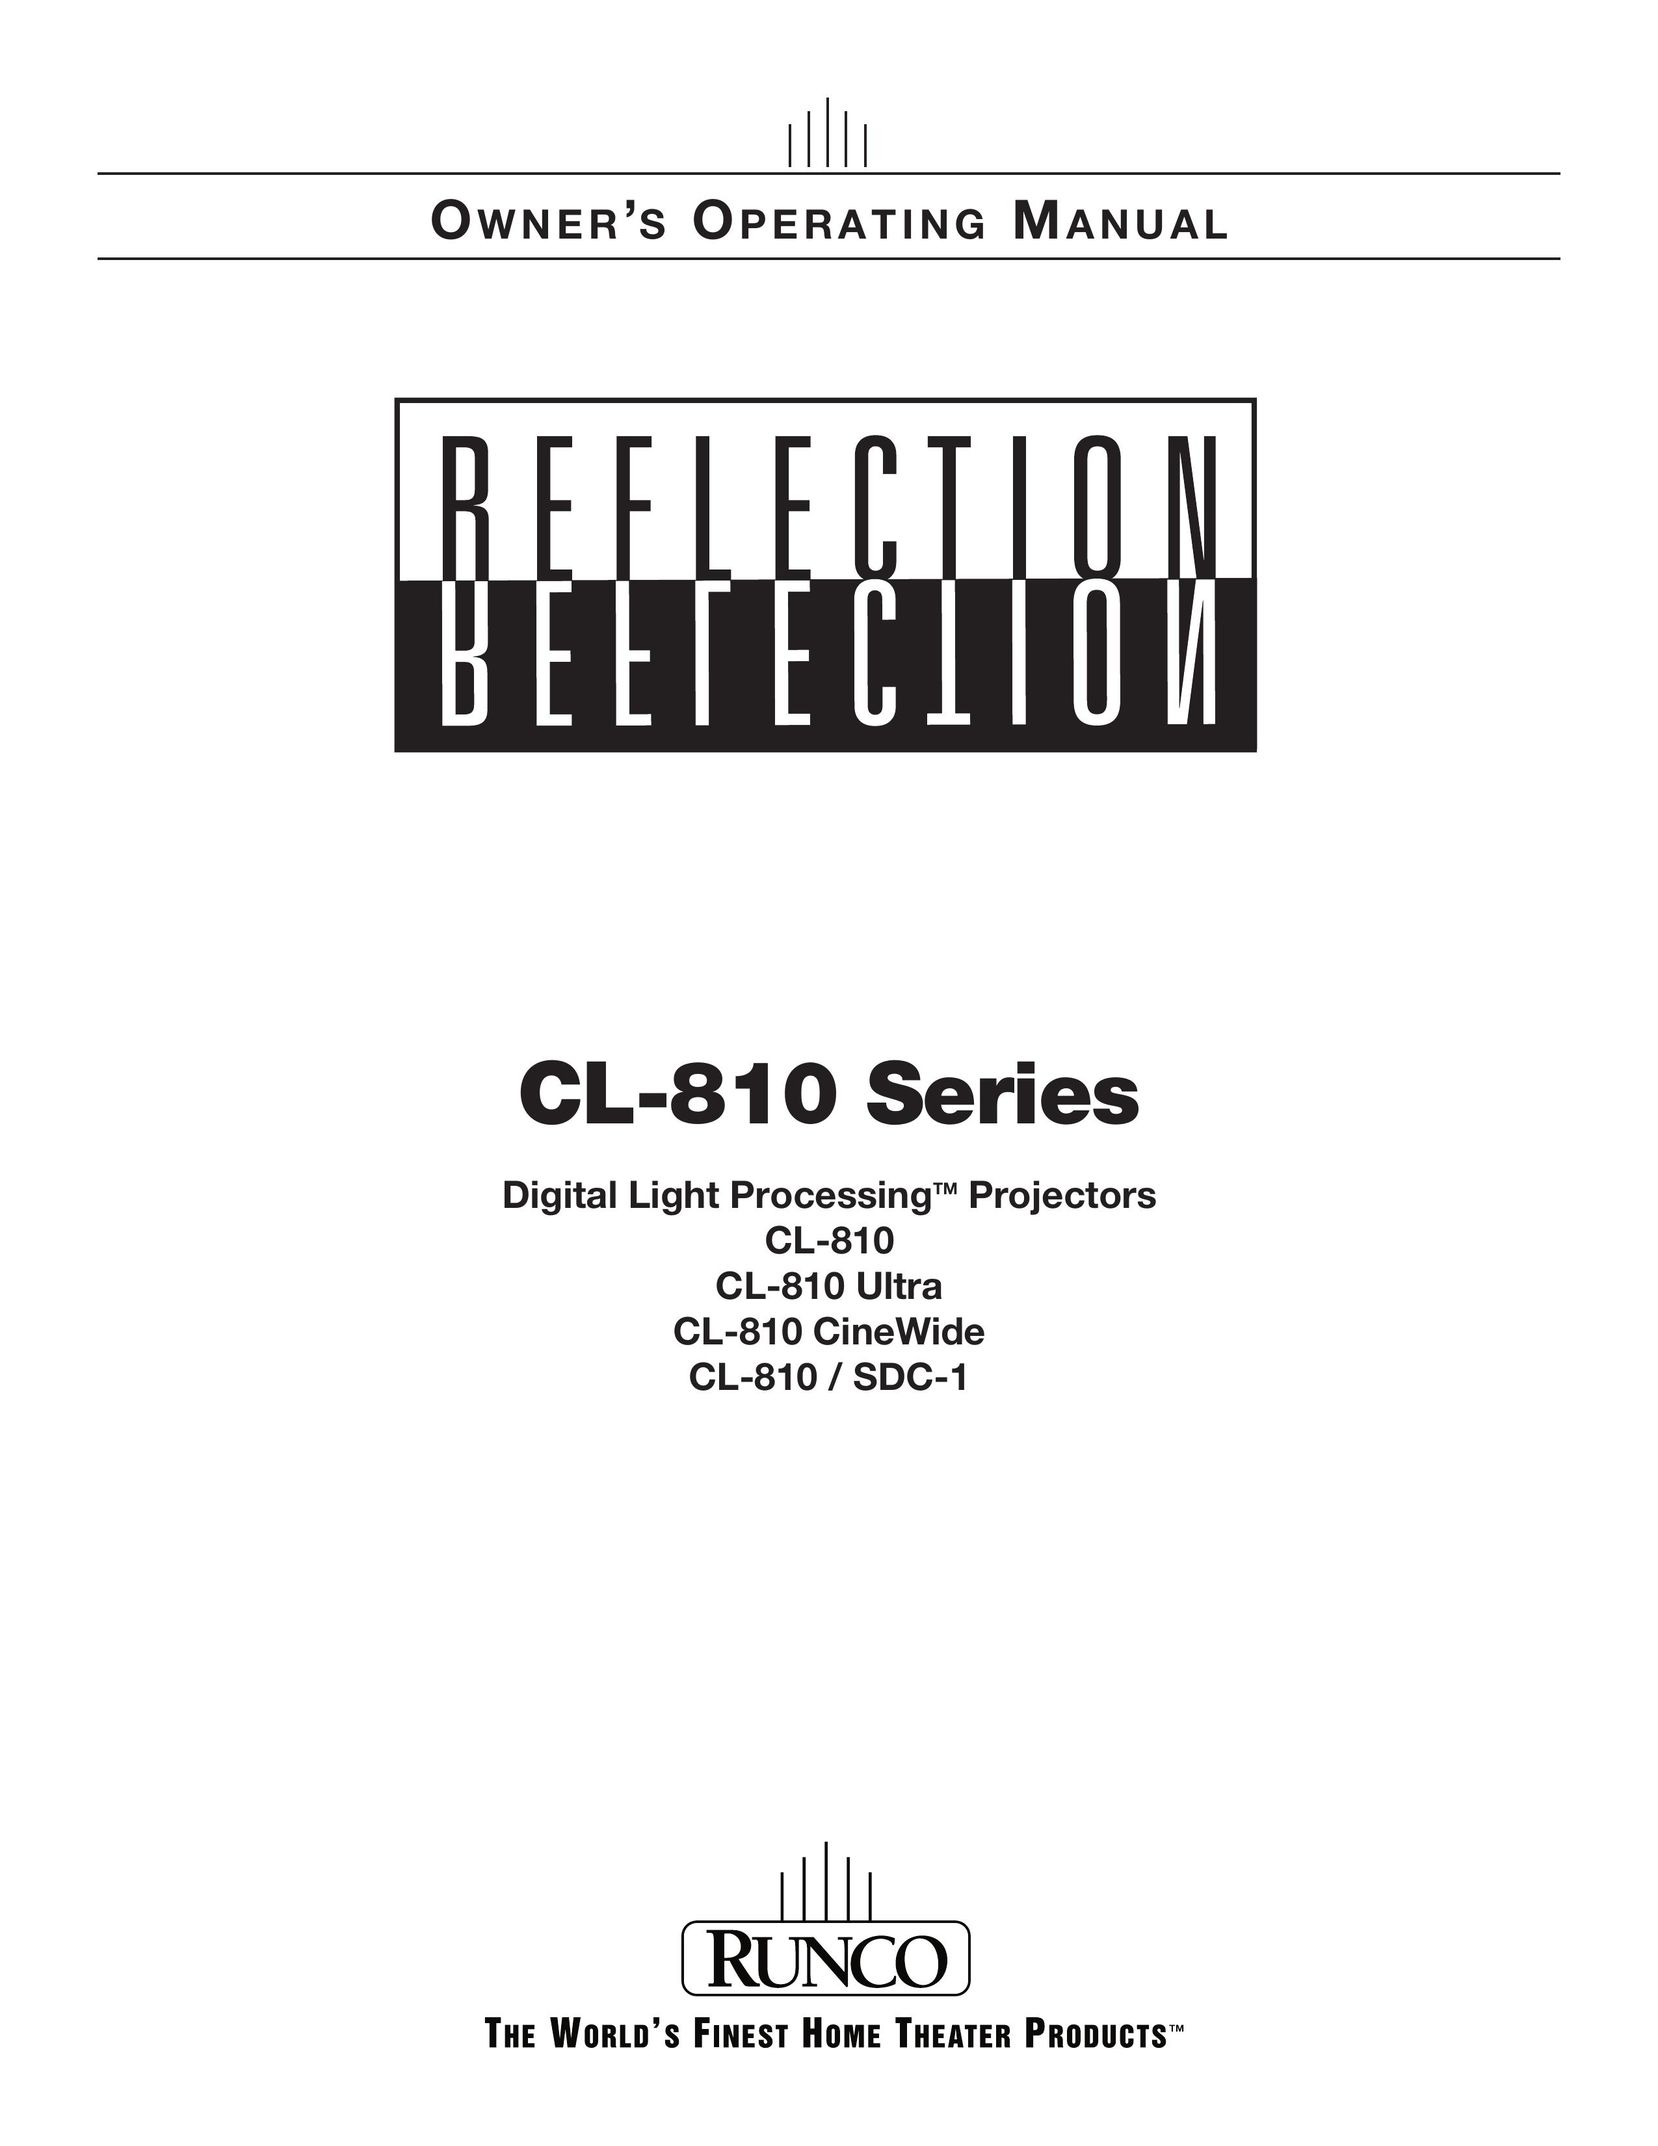 Runco CL-810 CINEWIDE Projector User Manual